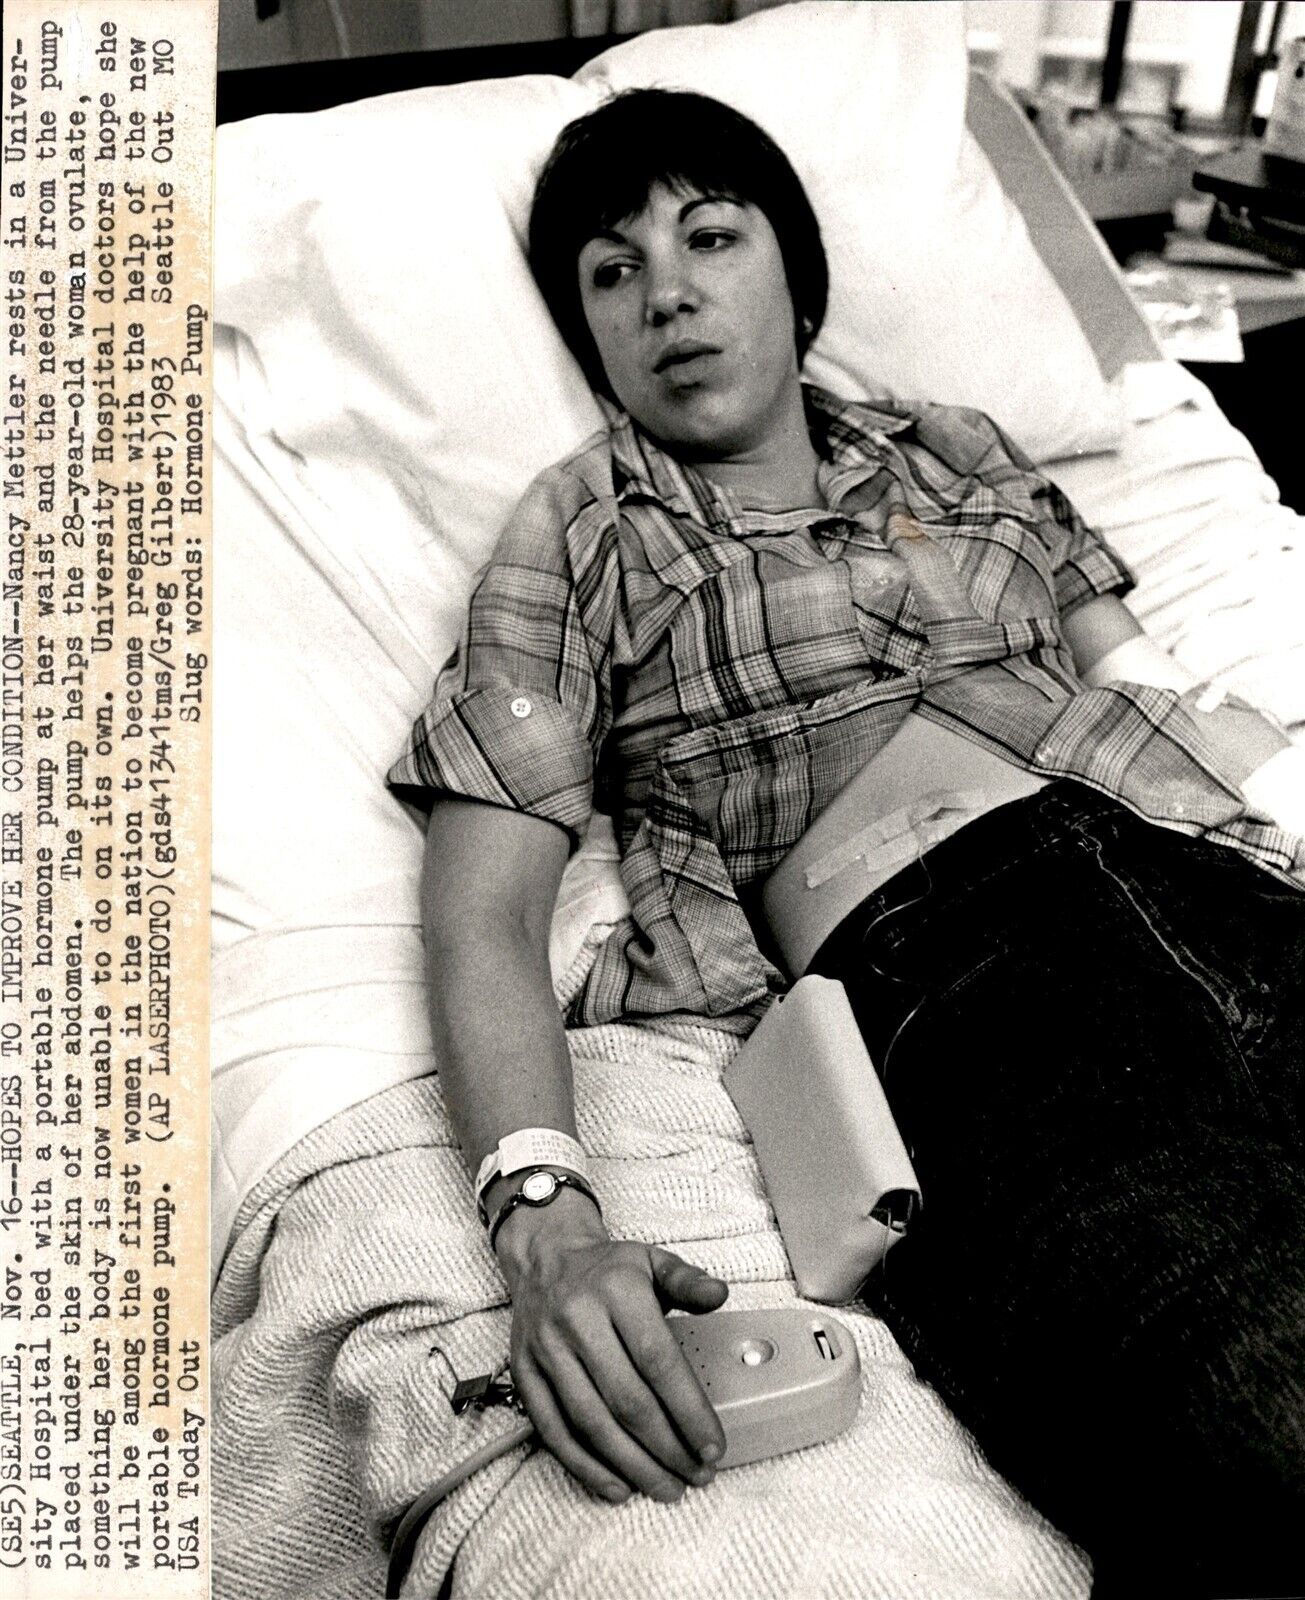 LG994 1983 Original Greg Gilbert Photo HORMONE PUMP AIDS IN OVULATION FOR WOMAN